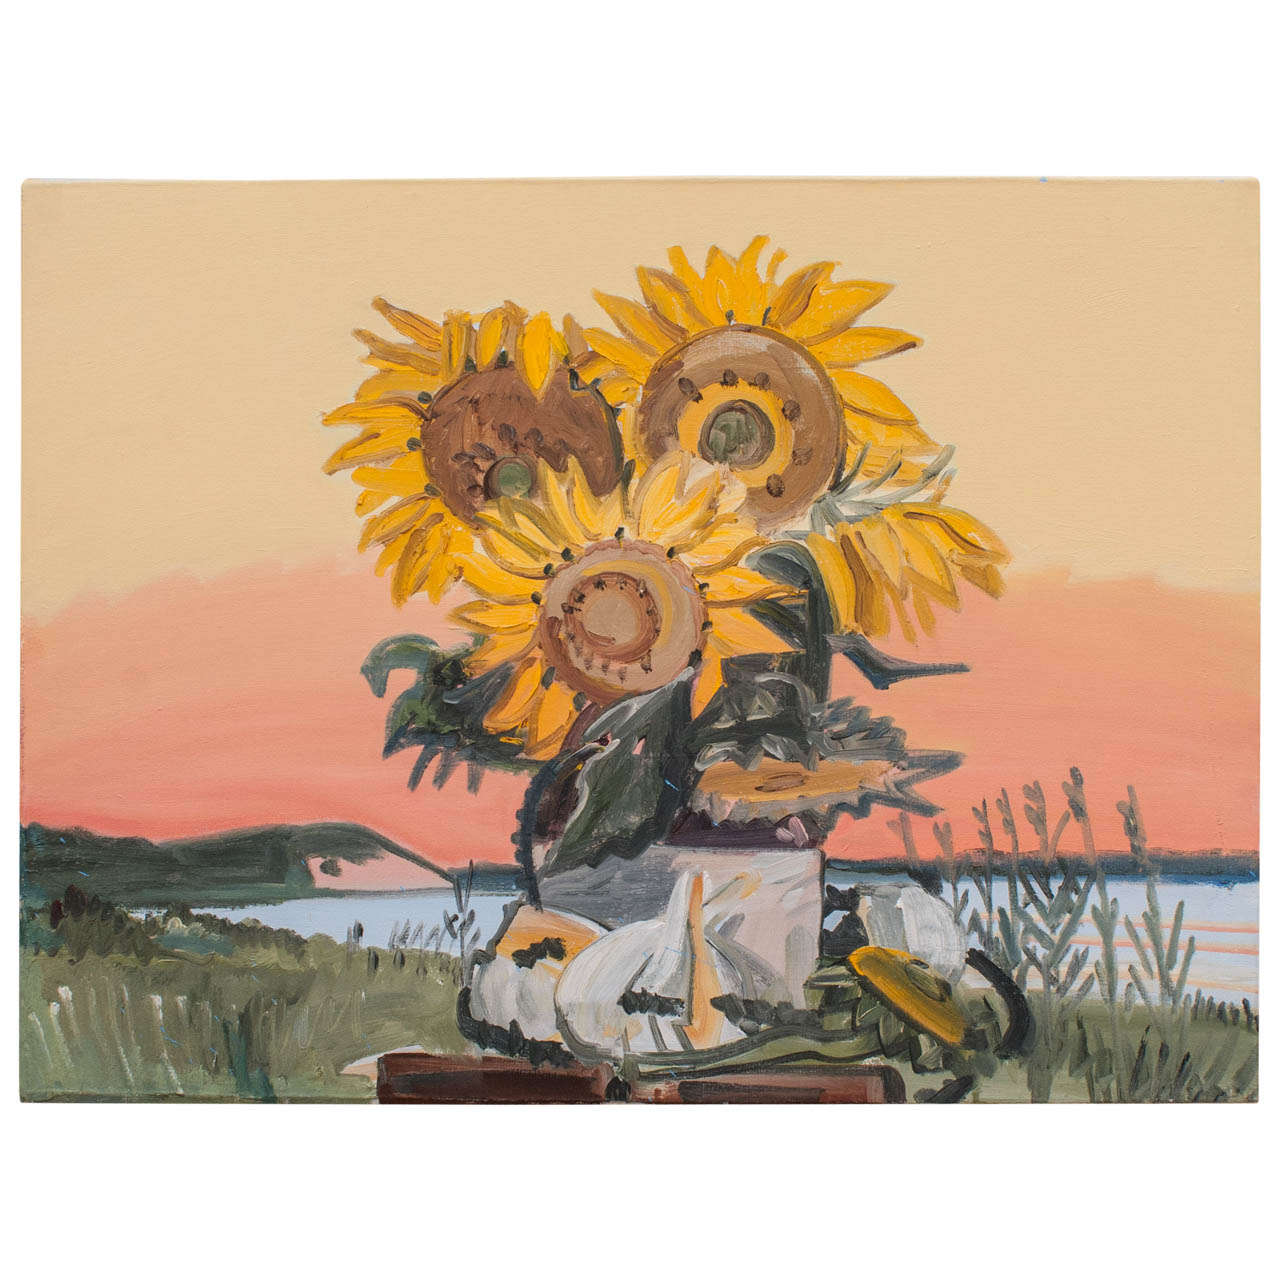 Gregory Botts "Sunflower at Sunset" For Sale